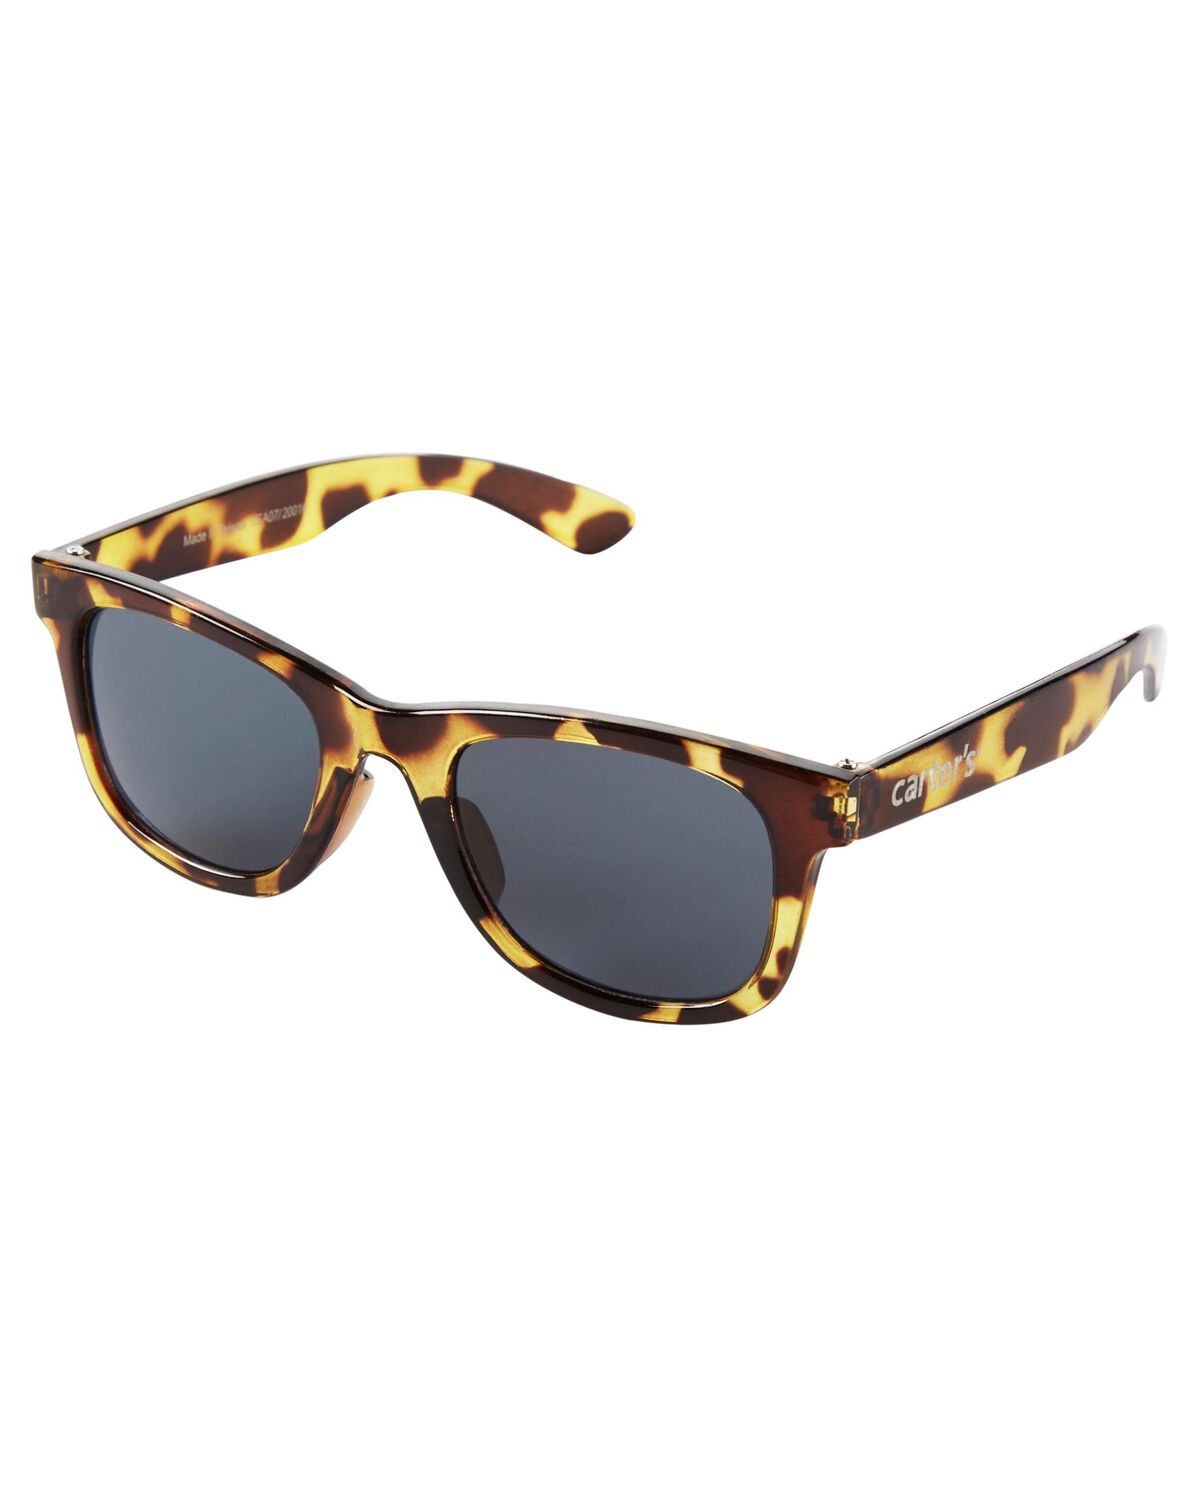 Tortoise Shell Classic Sunglasses